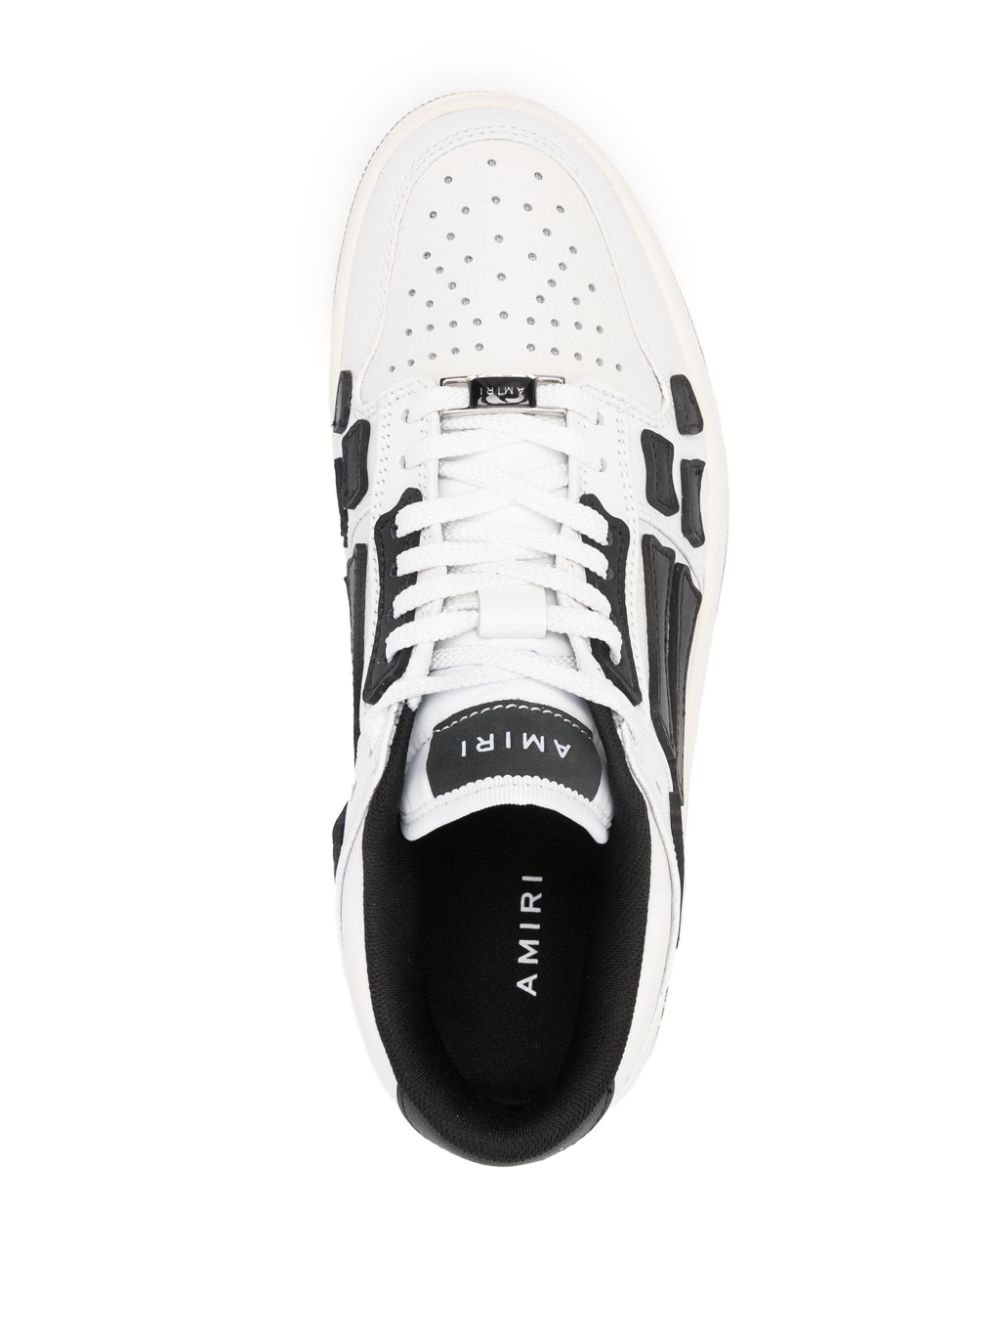 Shop Amiri Skel Leather Sneakers In White